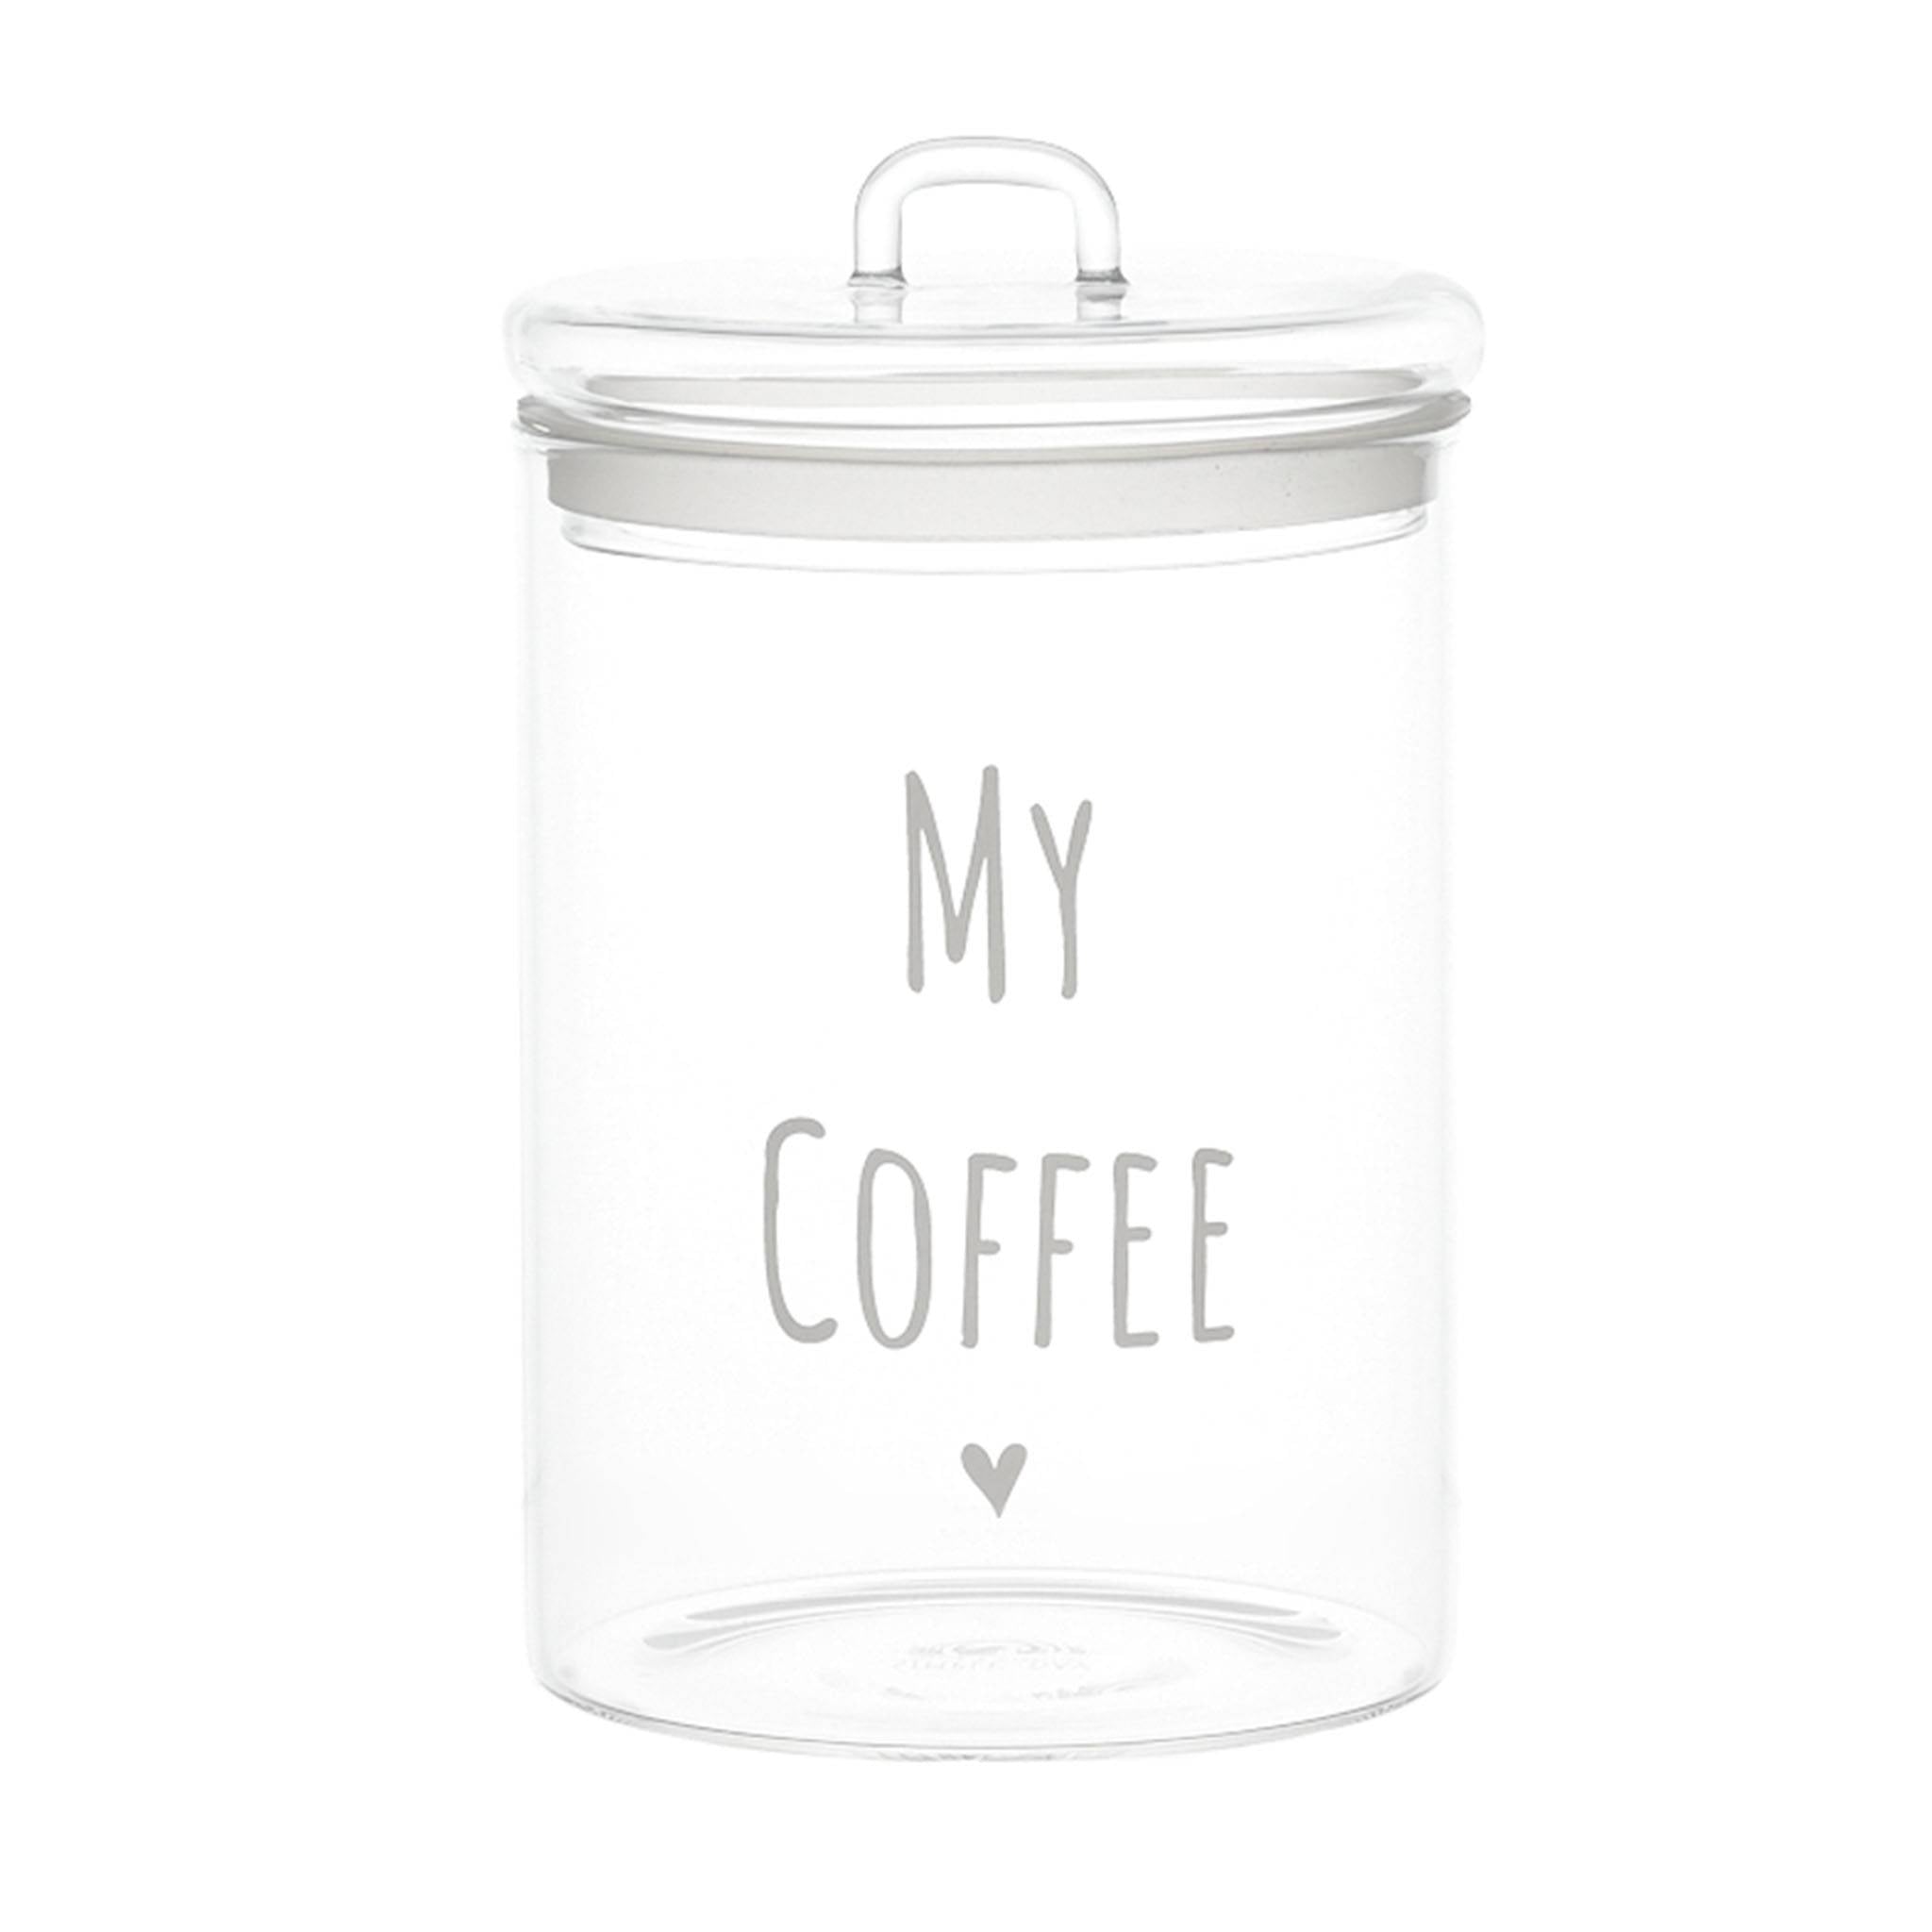 My Coffee Jar